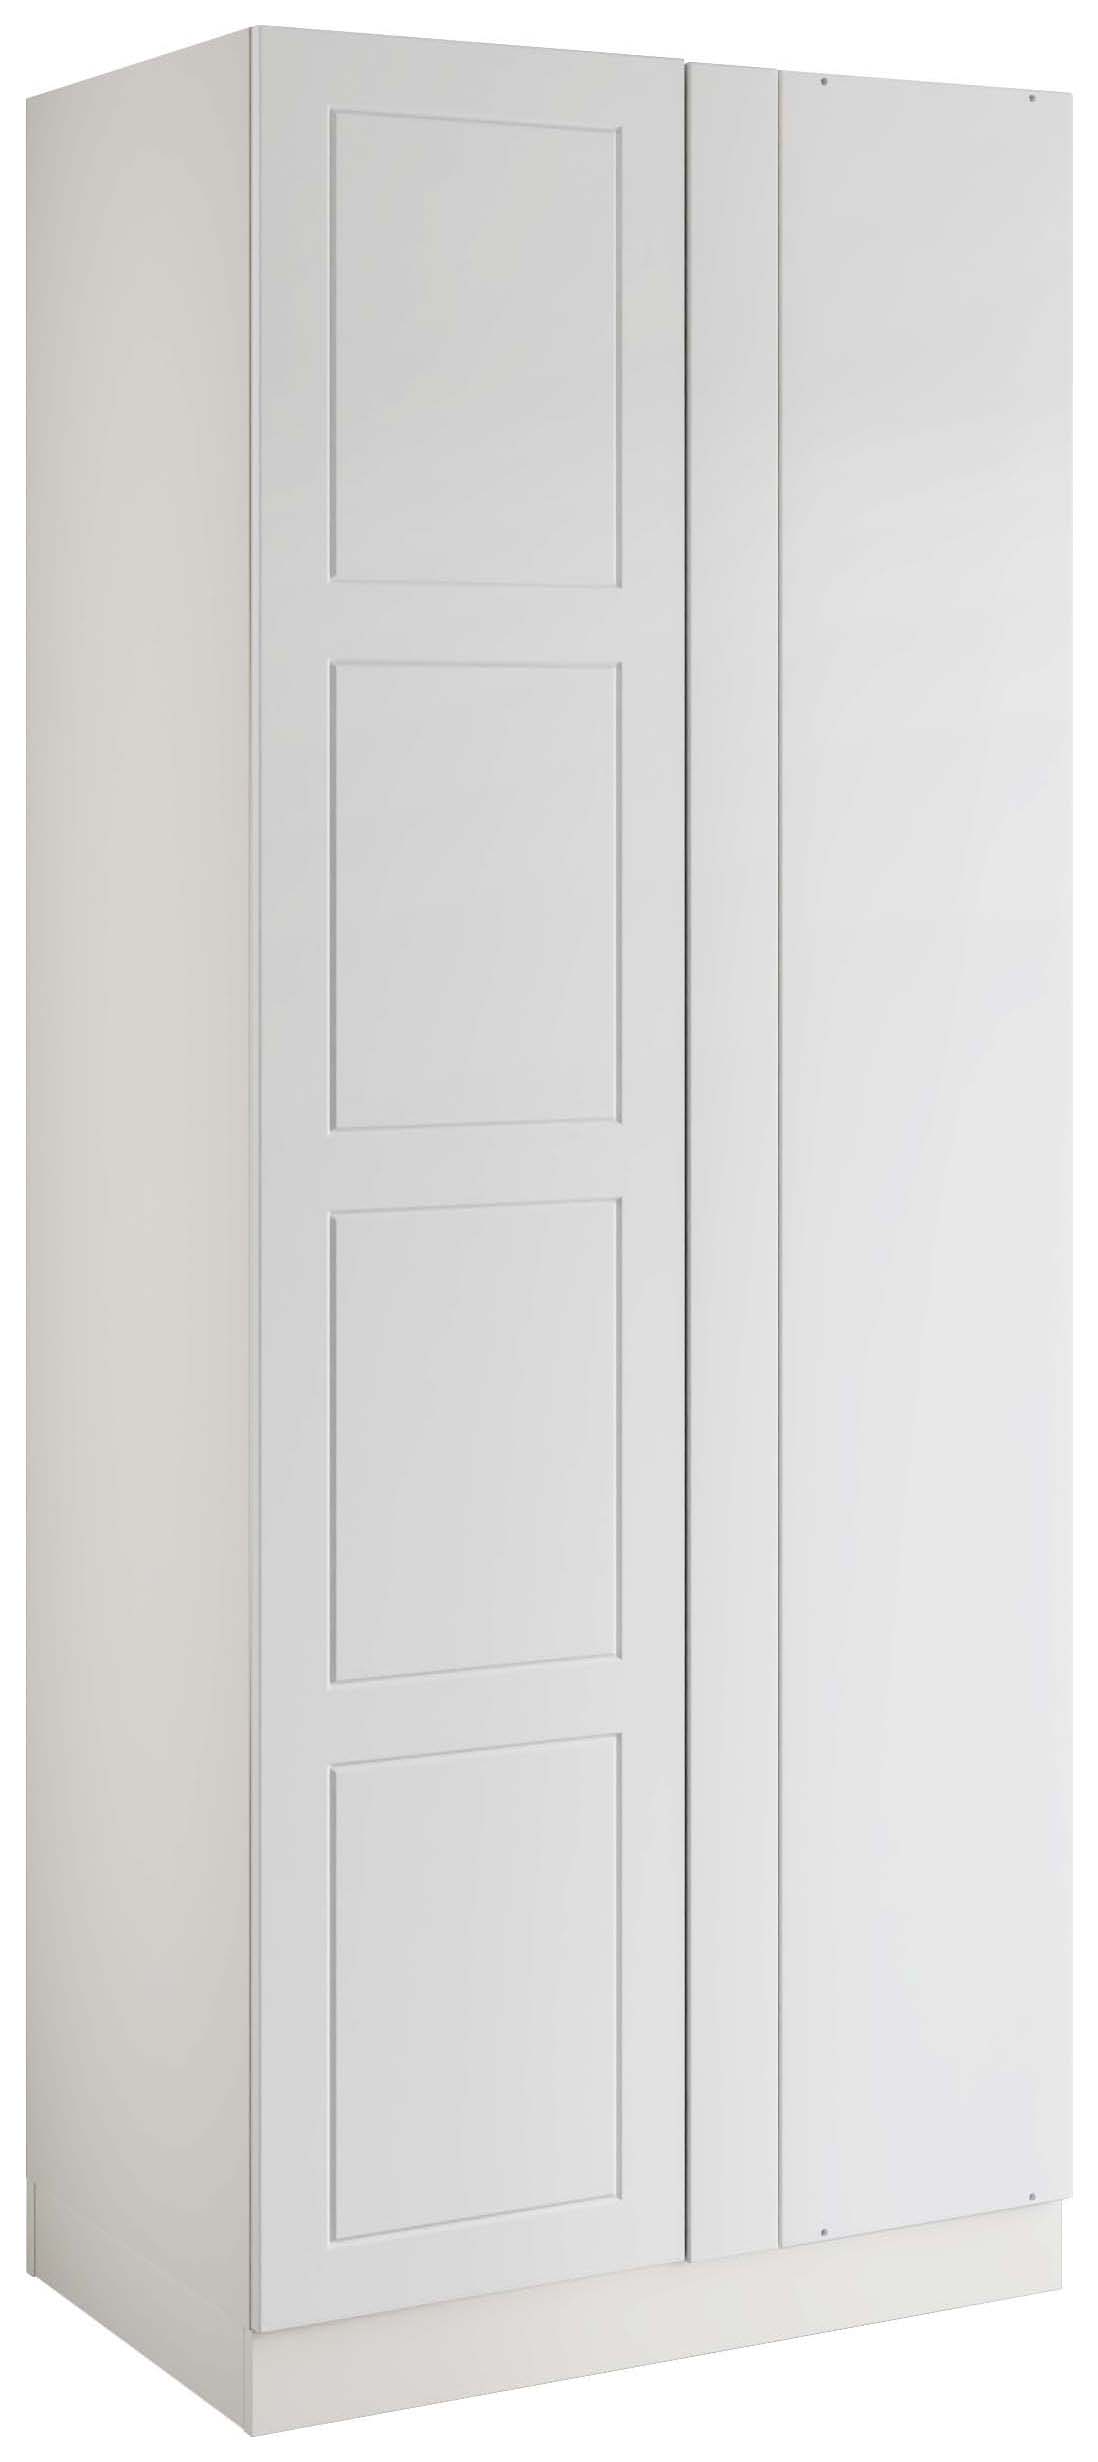 Harrogate White Blind Corner Wardrobe - 900 x 2260 x 608mm